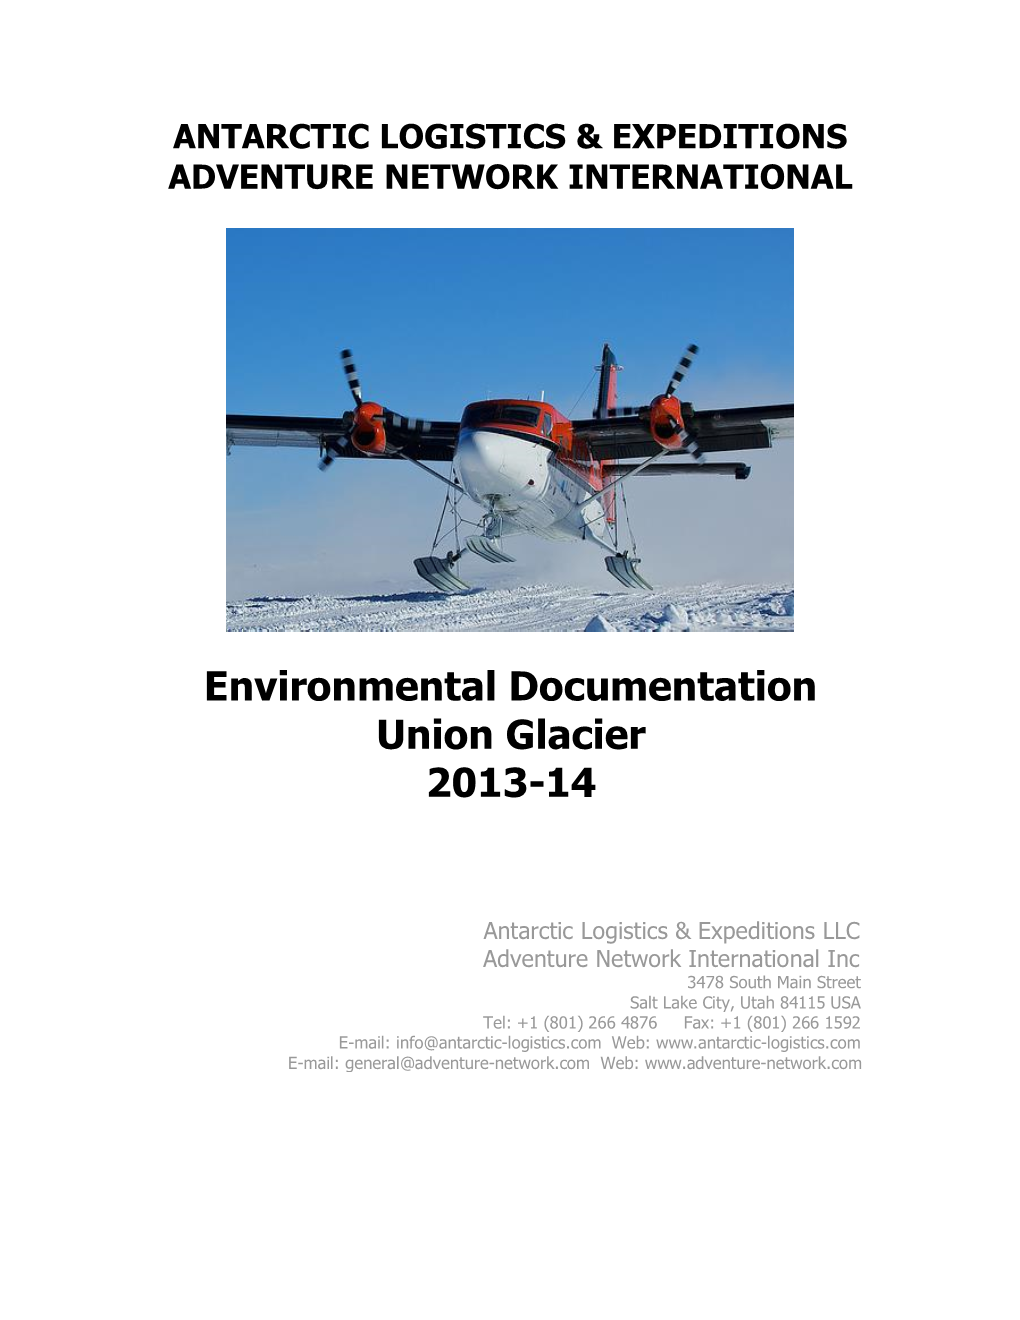 Environmental Documentation Union Glacier 2013-14